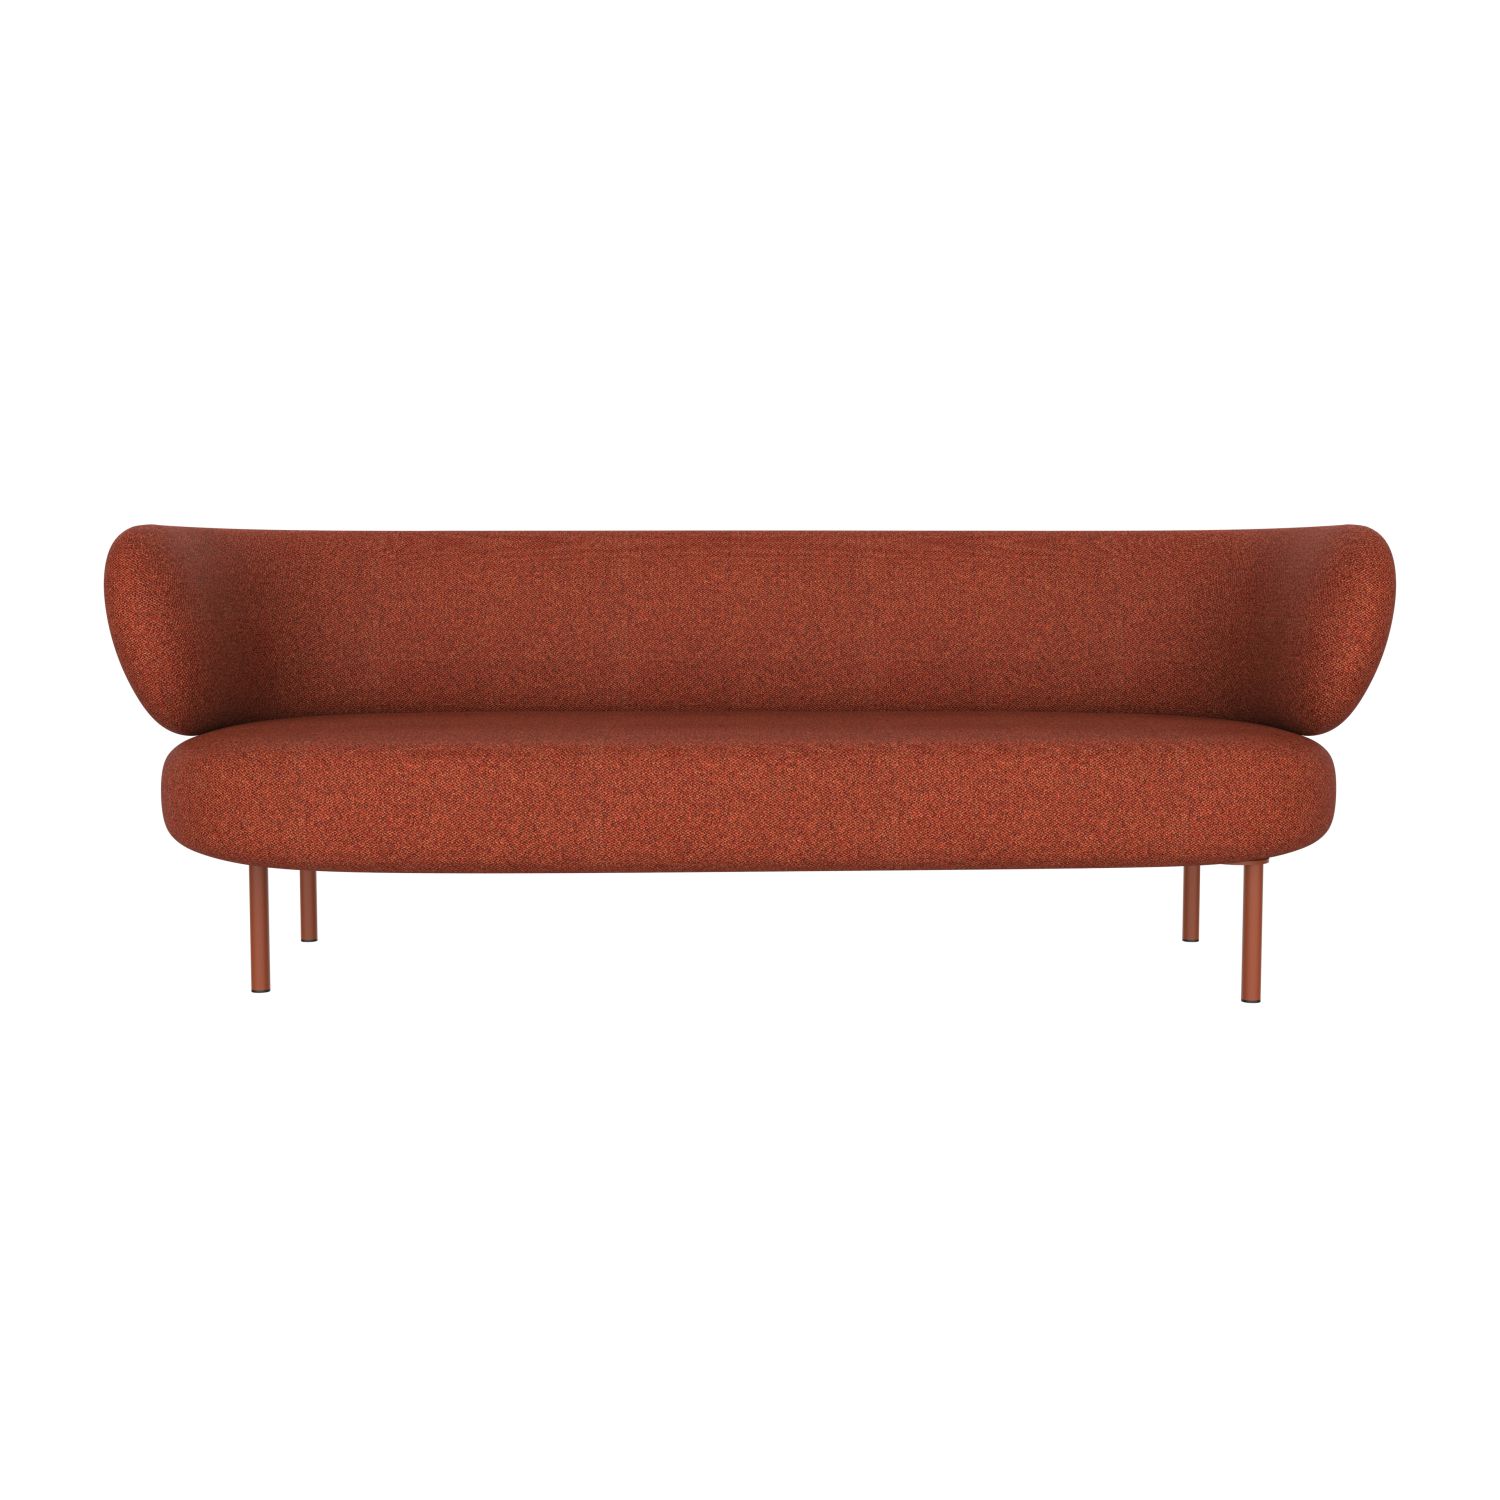 lensvelt studio stefan scholten sofa 3seater 215x84cm middle lounge part moss clay brown 65 frame copper brownral8004